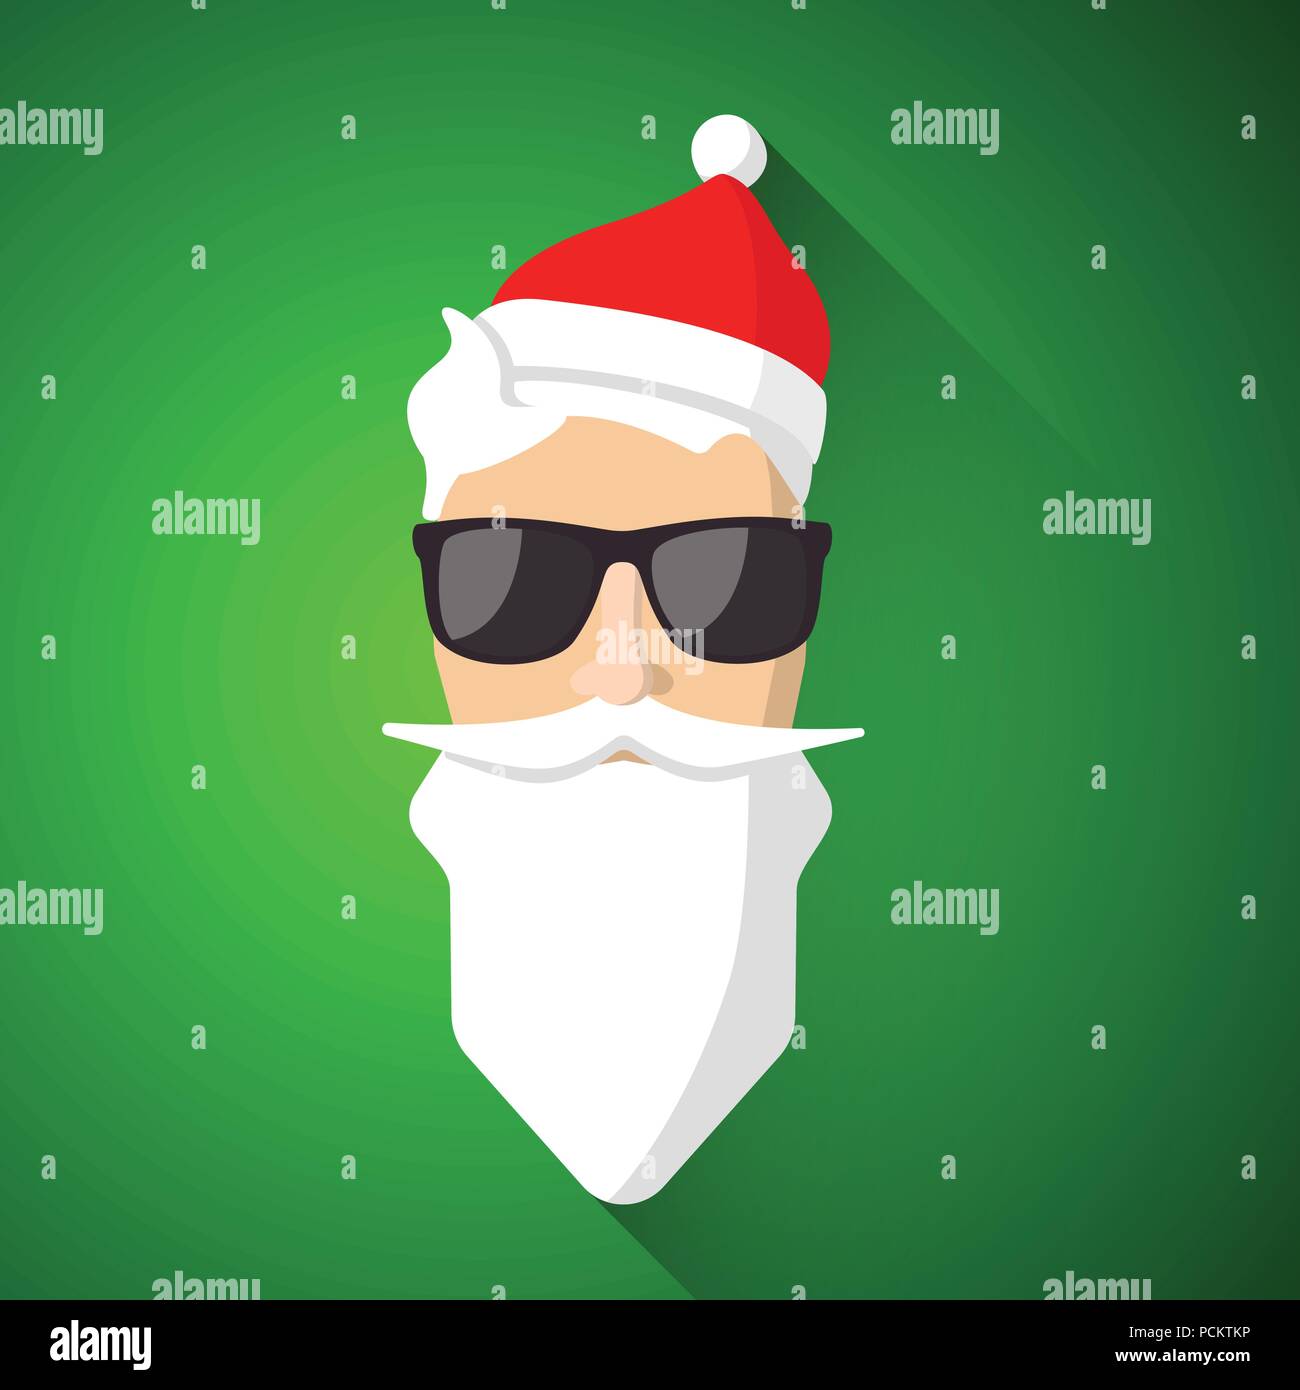 Hipster Santa Claus mit coolen Bart und Brille. Merry Christmas Card Design. Vector EPS 10. Stock Vektor